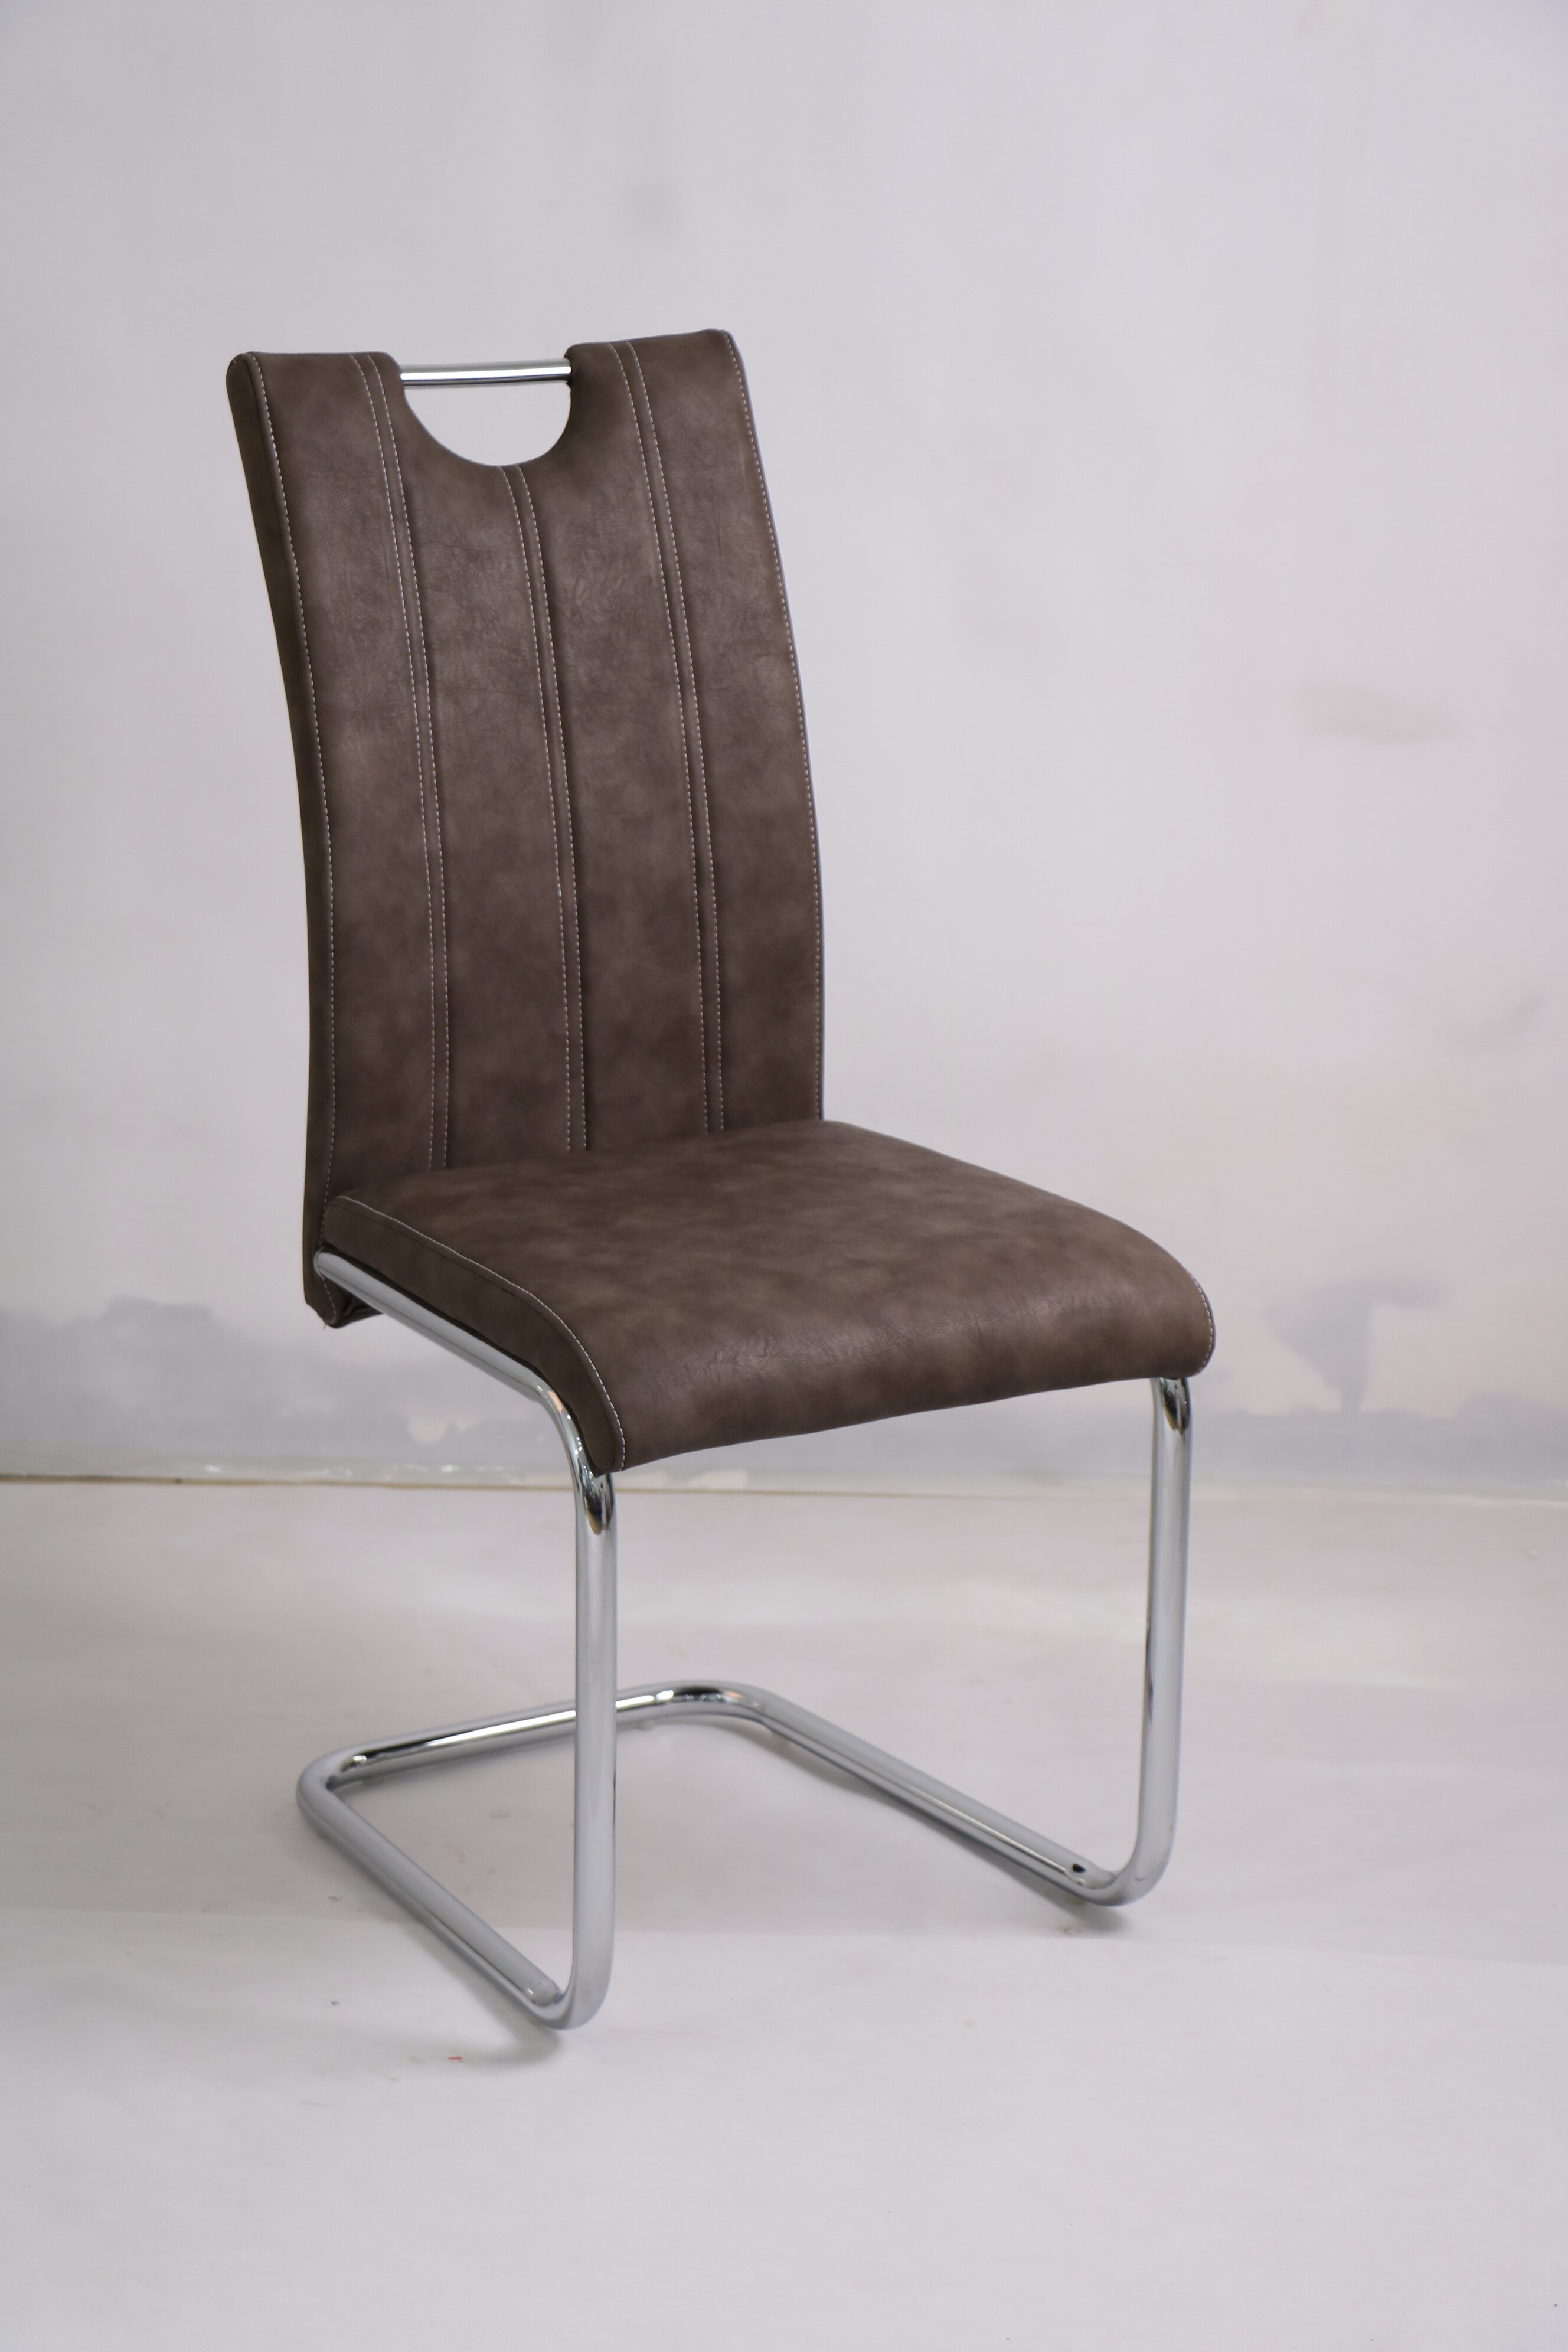 Classic black design fashion dining chair